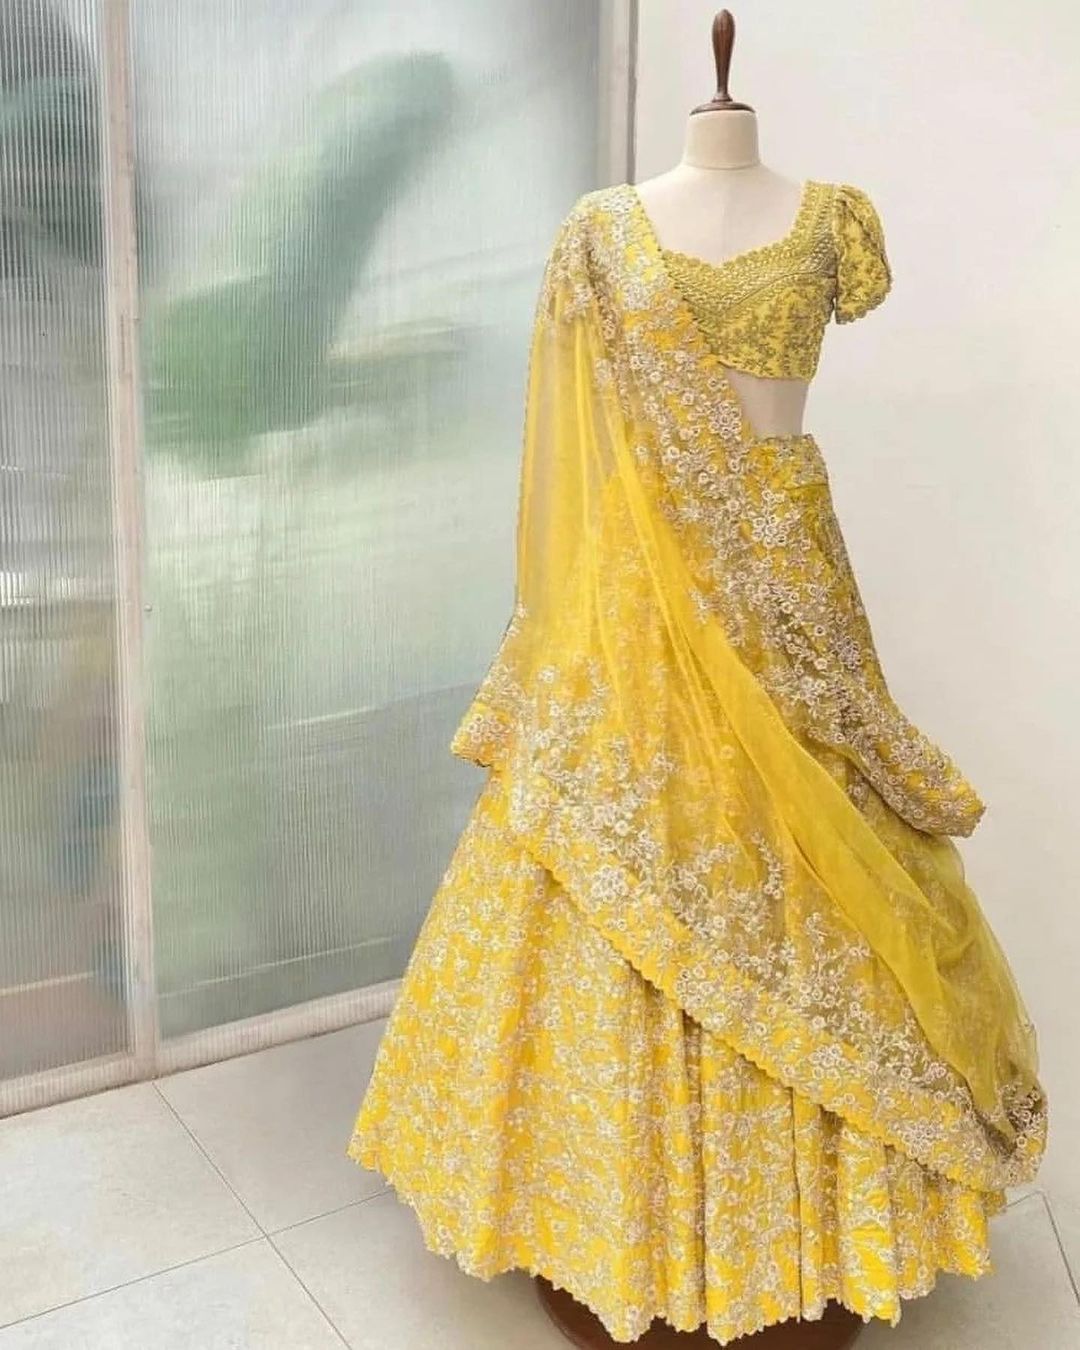 New & Latest Yellow Saree Blouse Designs